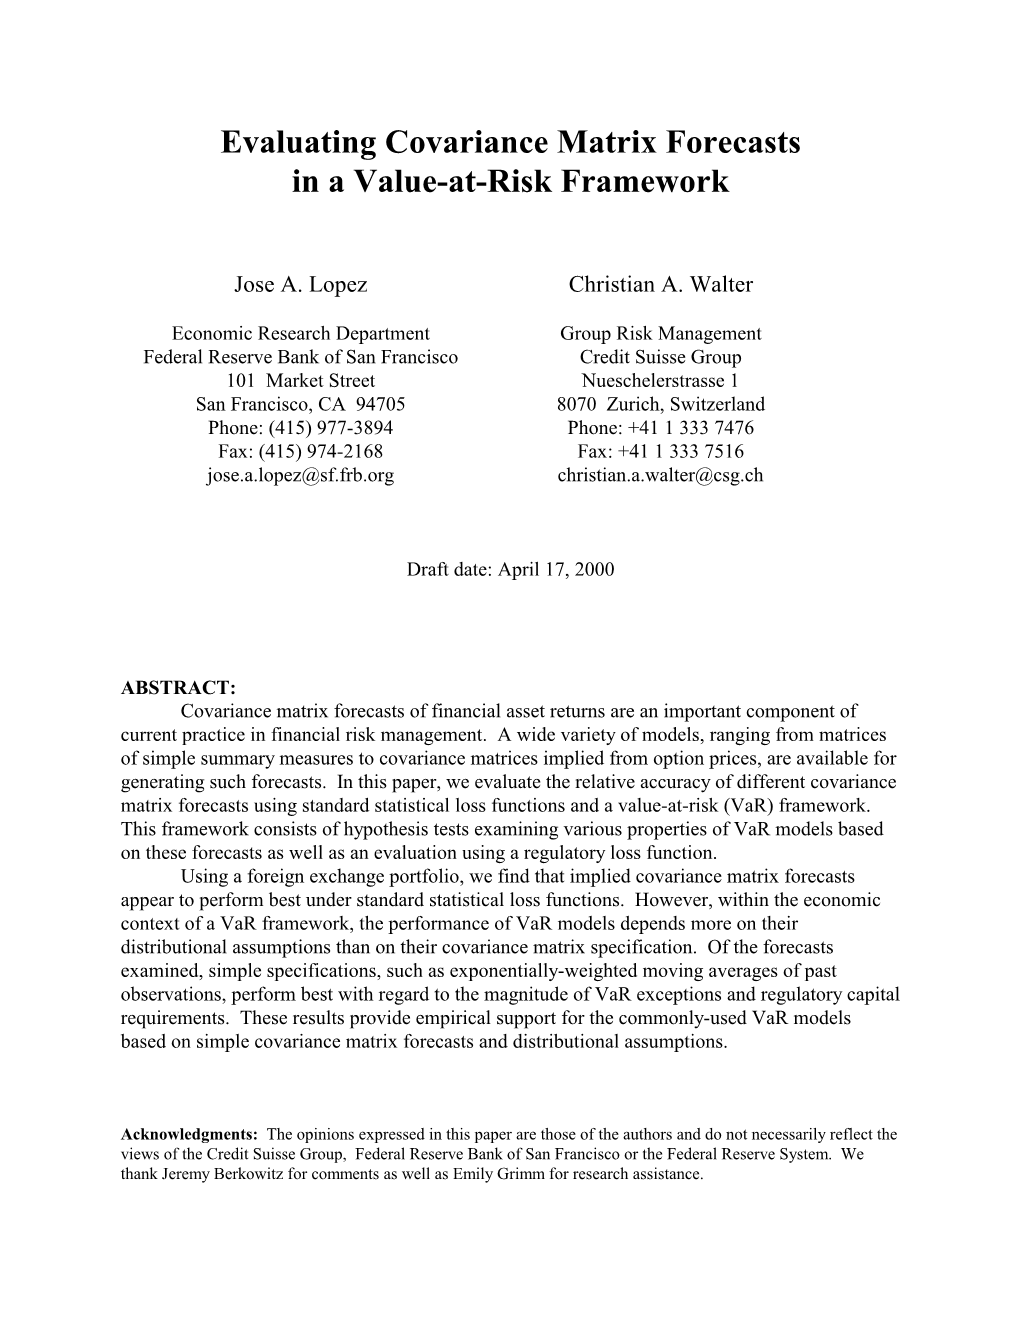 Evaluating Covariance Matrix Forecasts in a Value-At-Risk Framework